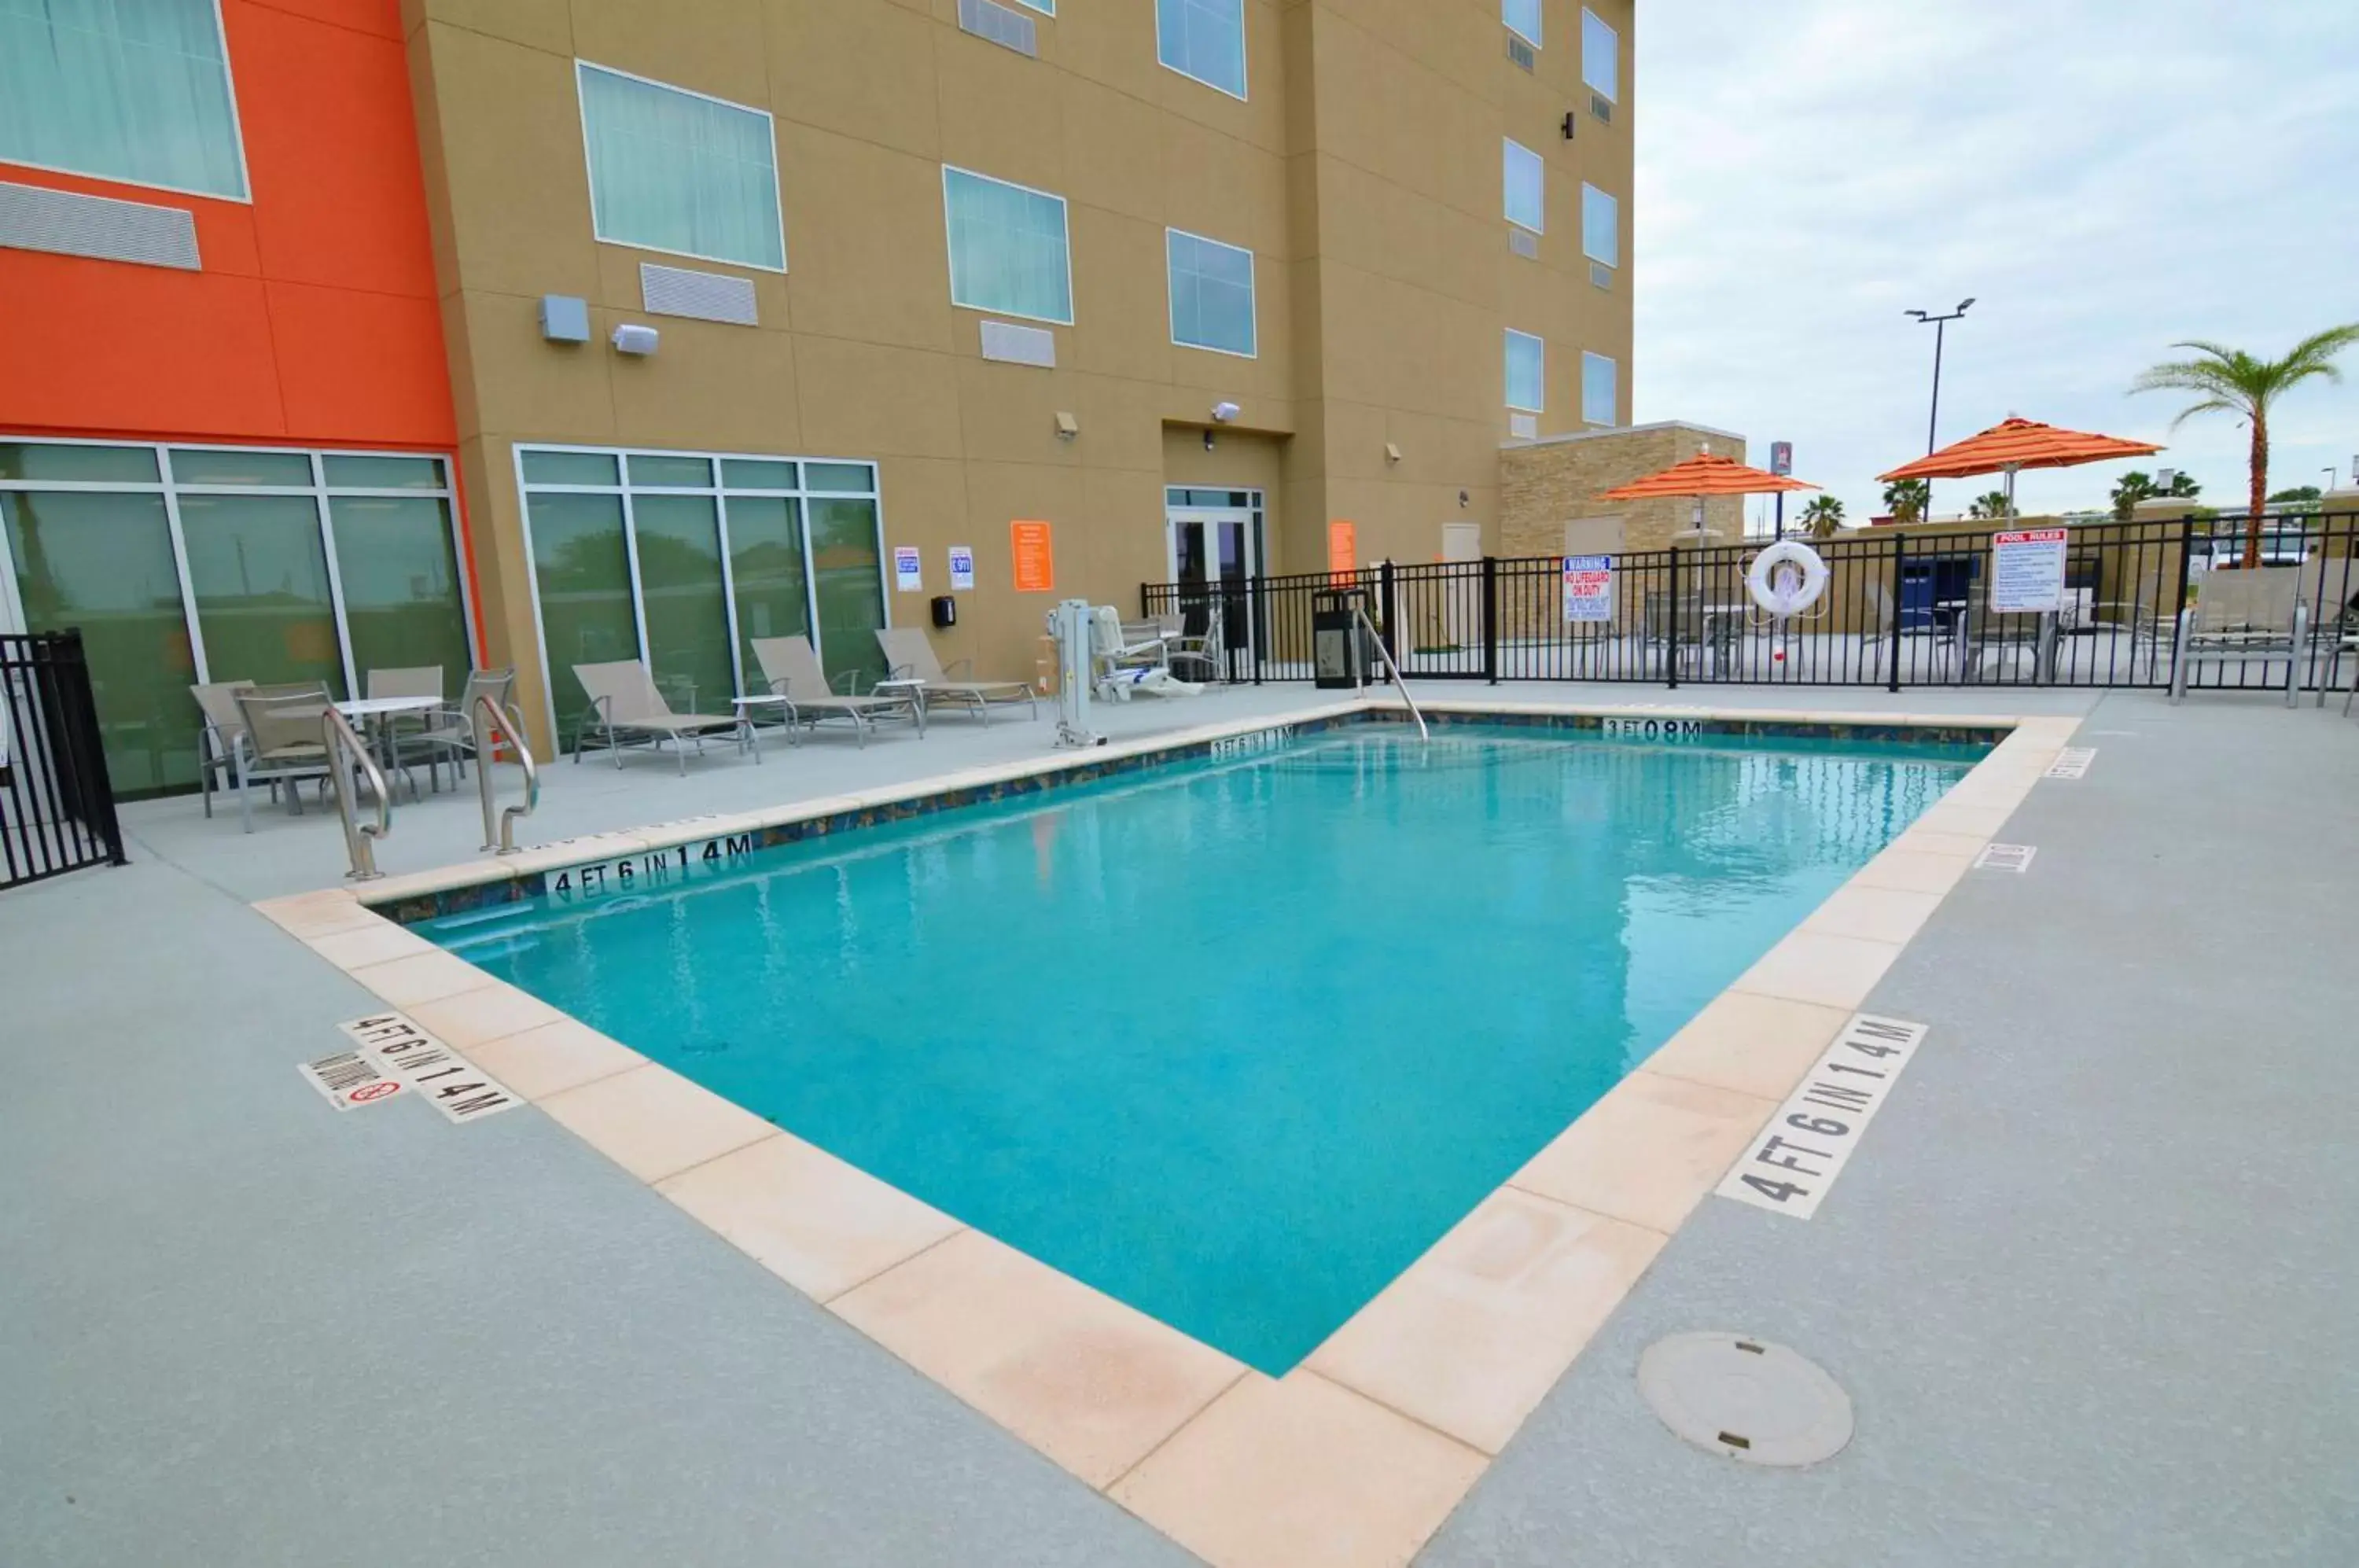 On site, Swimming Pool in Best Western Executive Residency IH-37 Corpus Christi